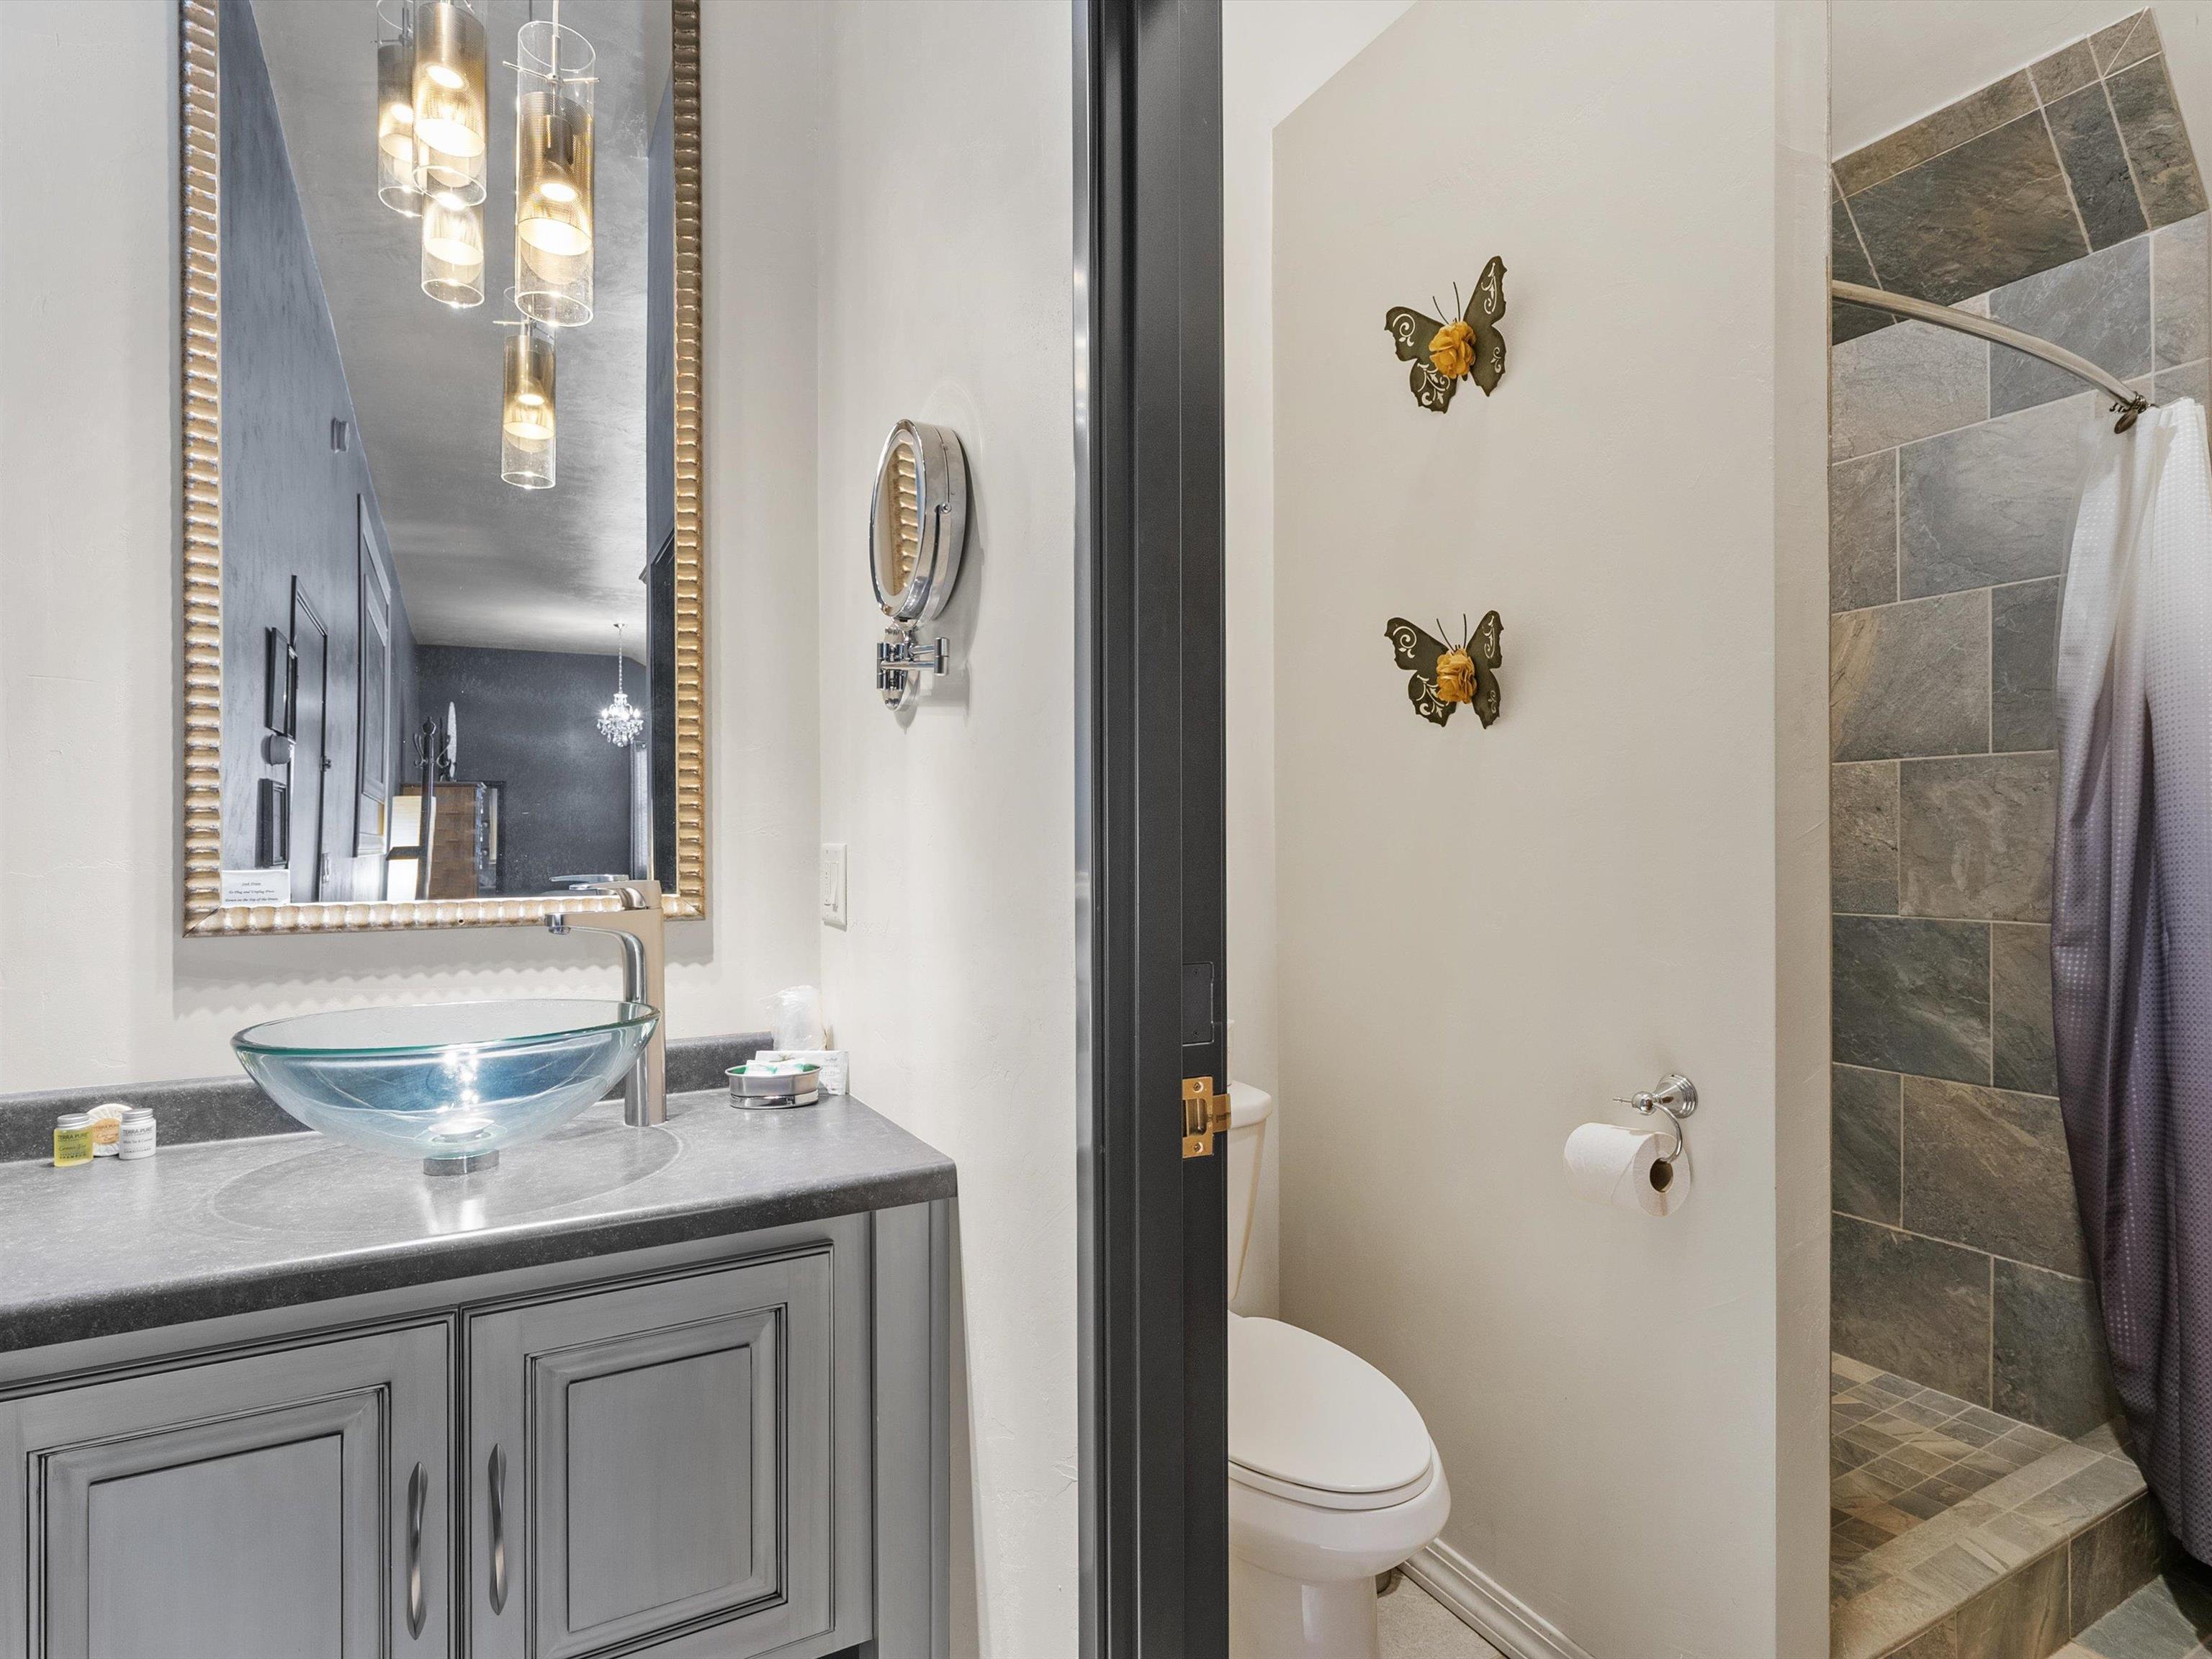 Epiphany suite - custom bathroom cabinets & tile shower